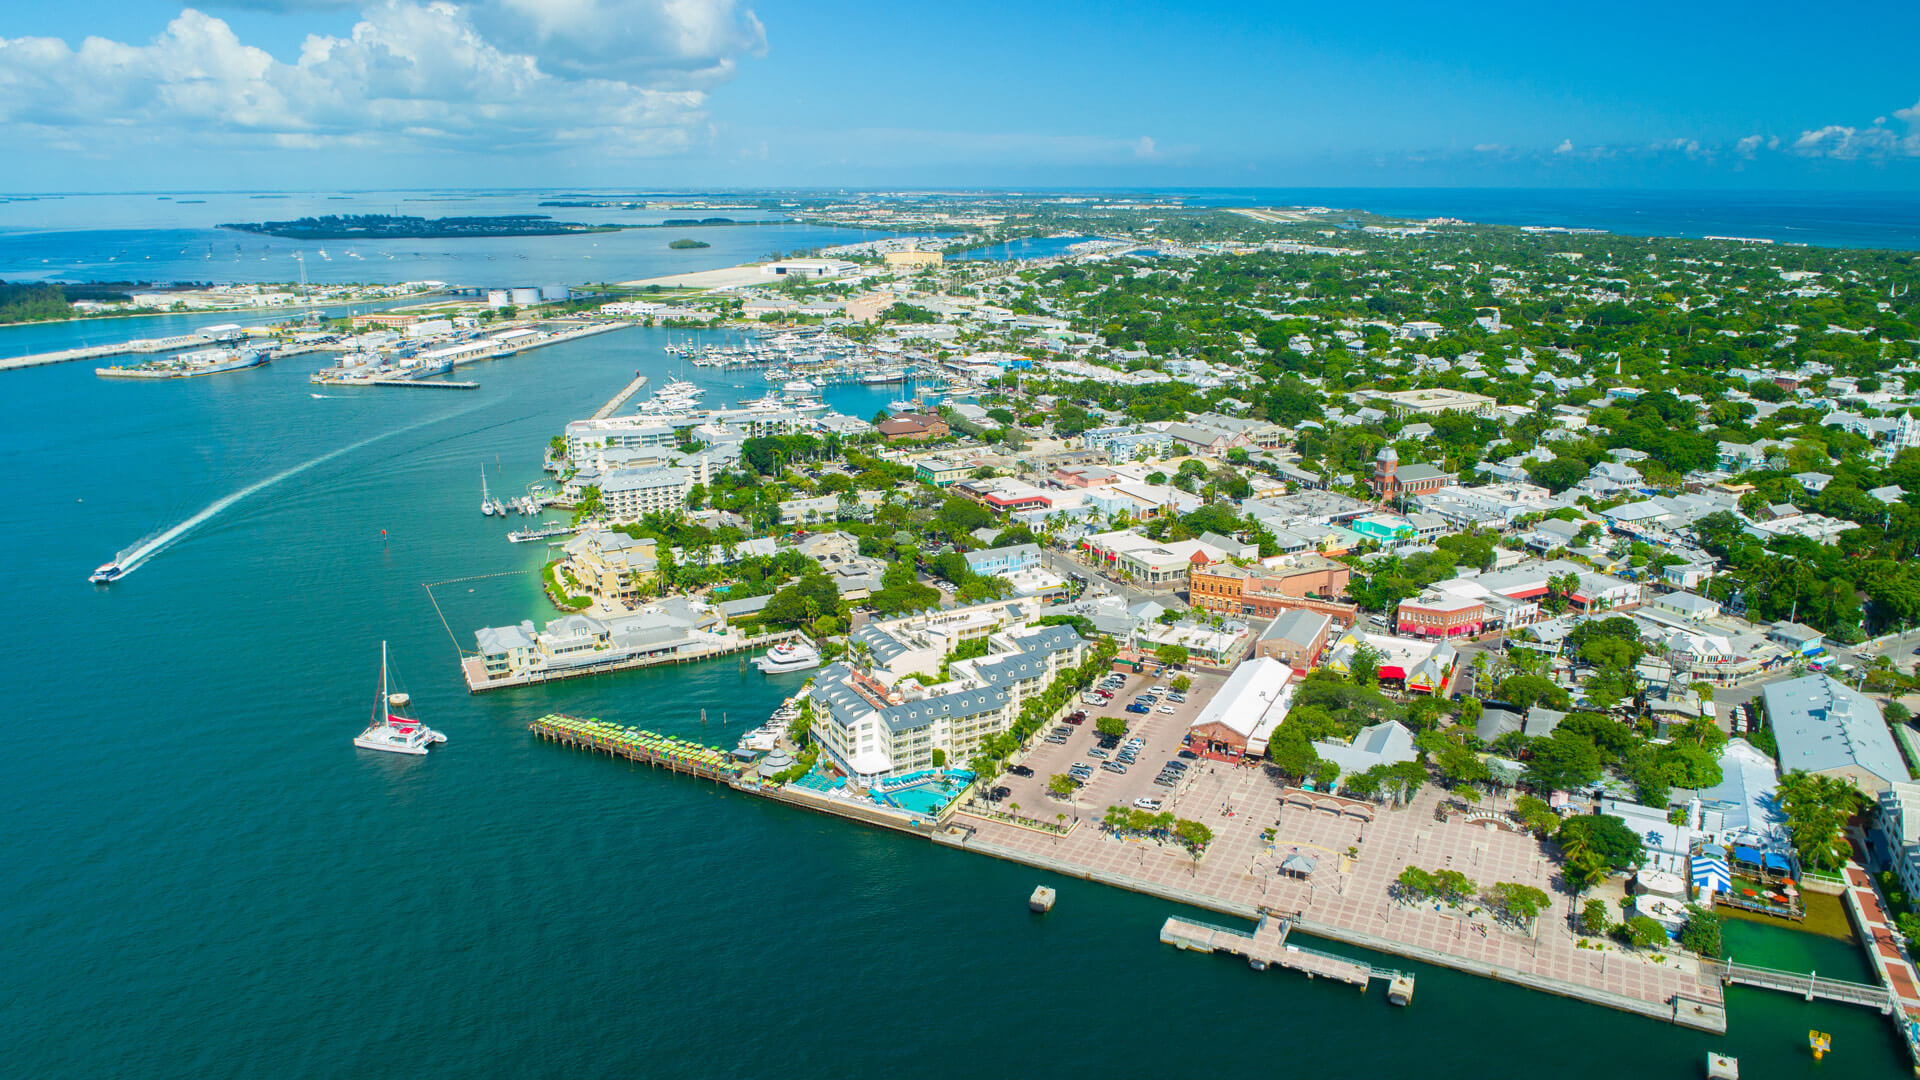 Image of Key West, FL